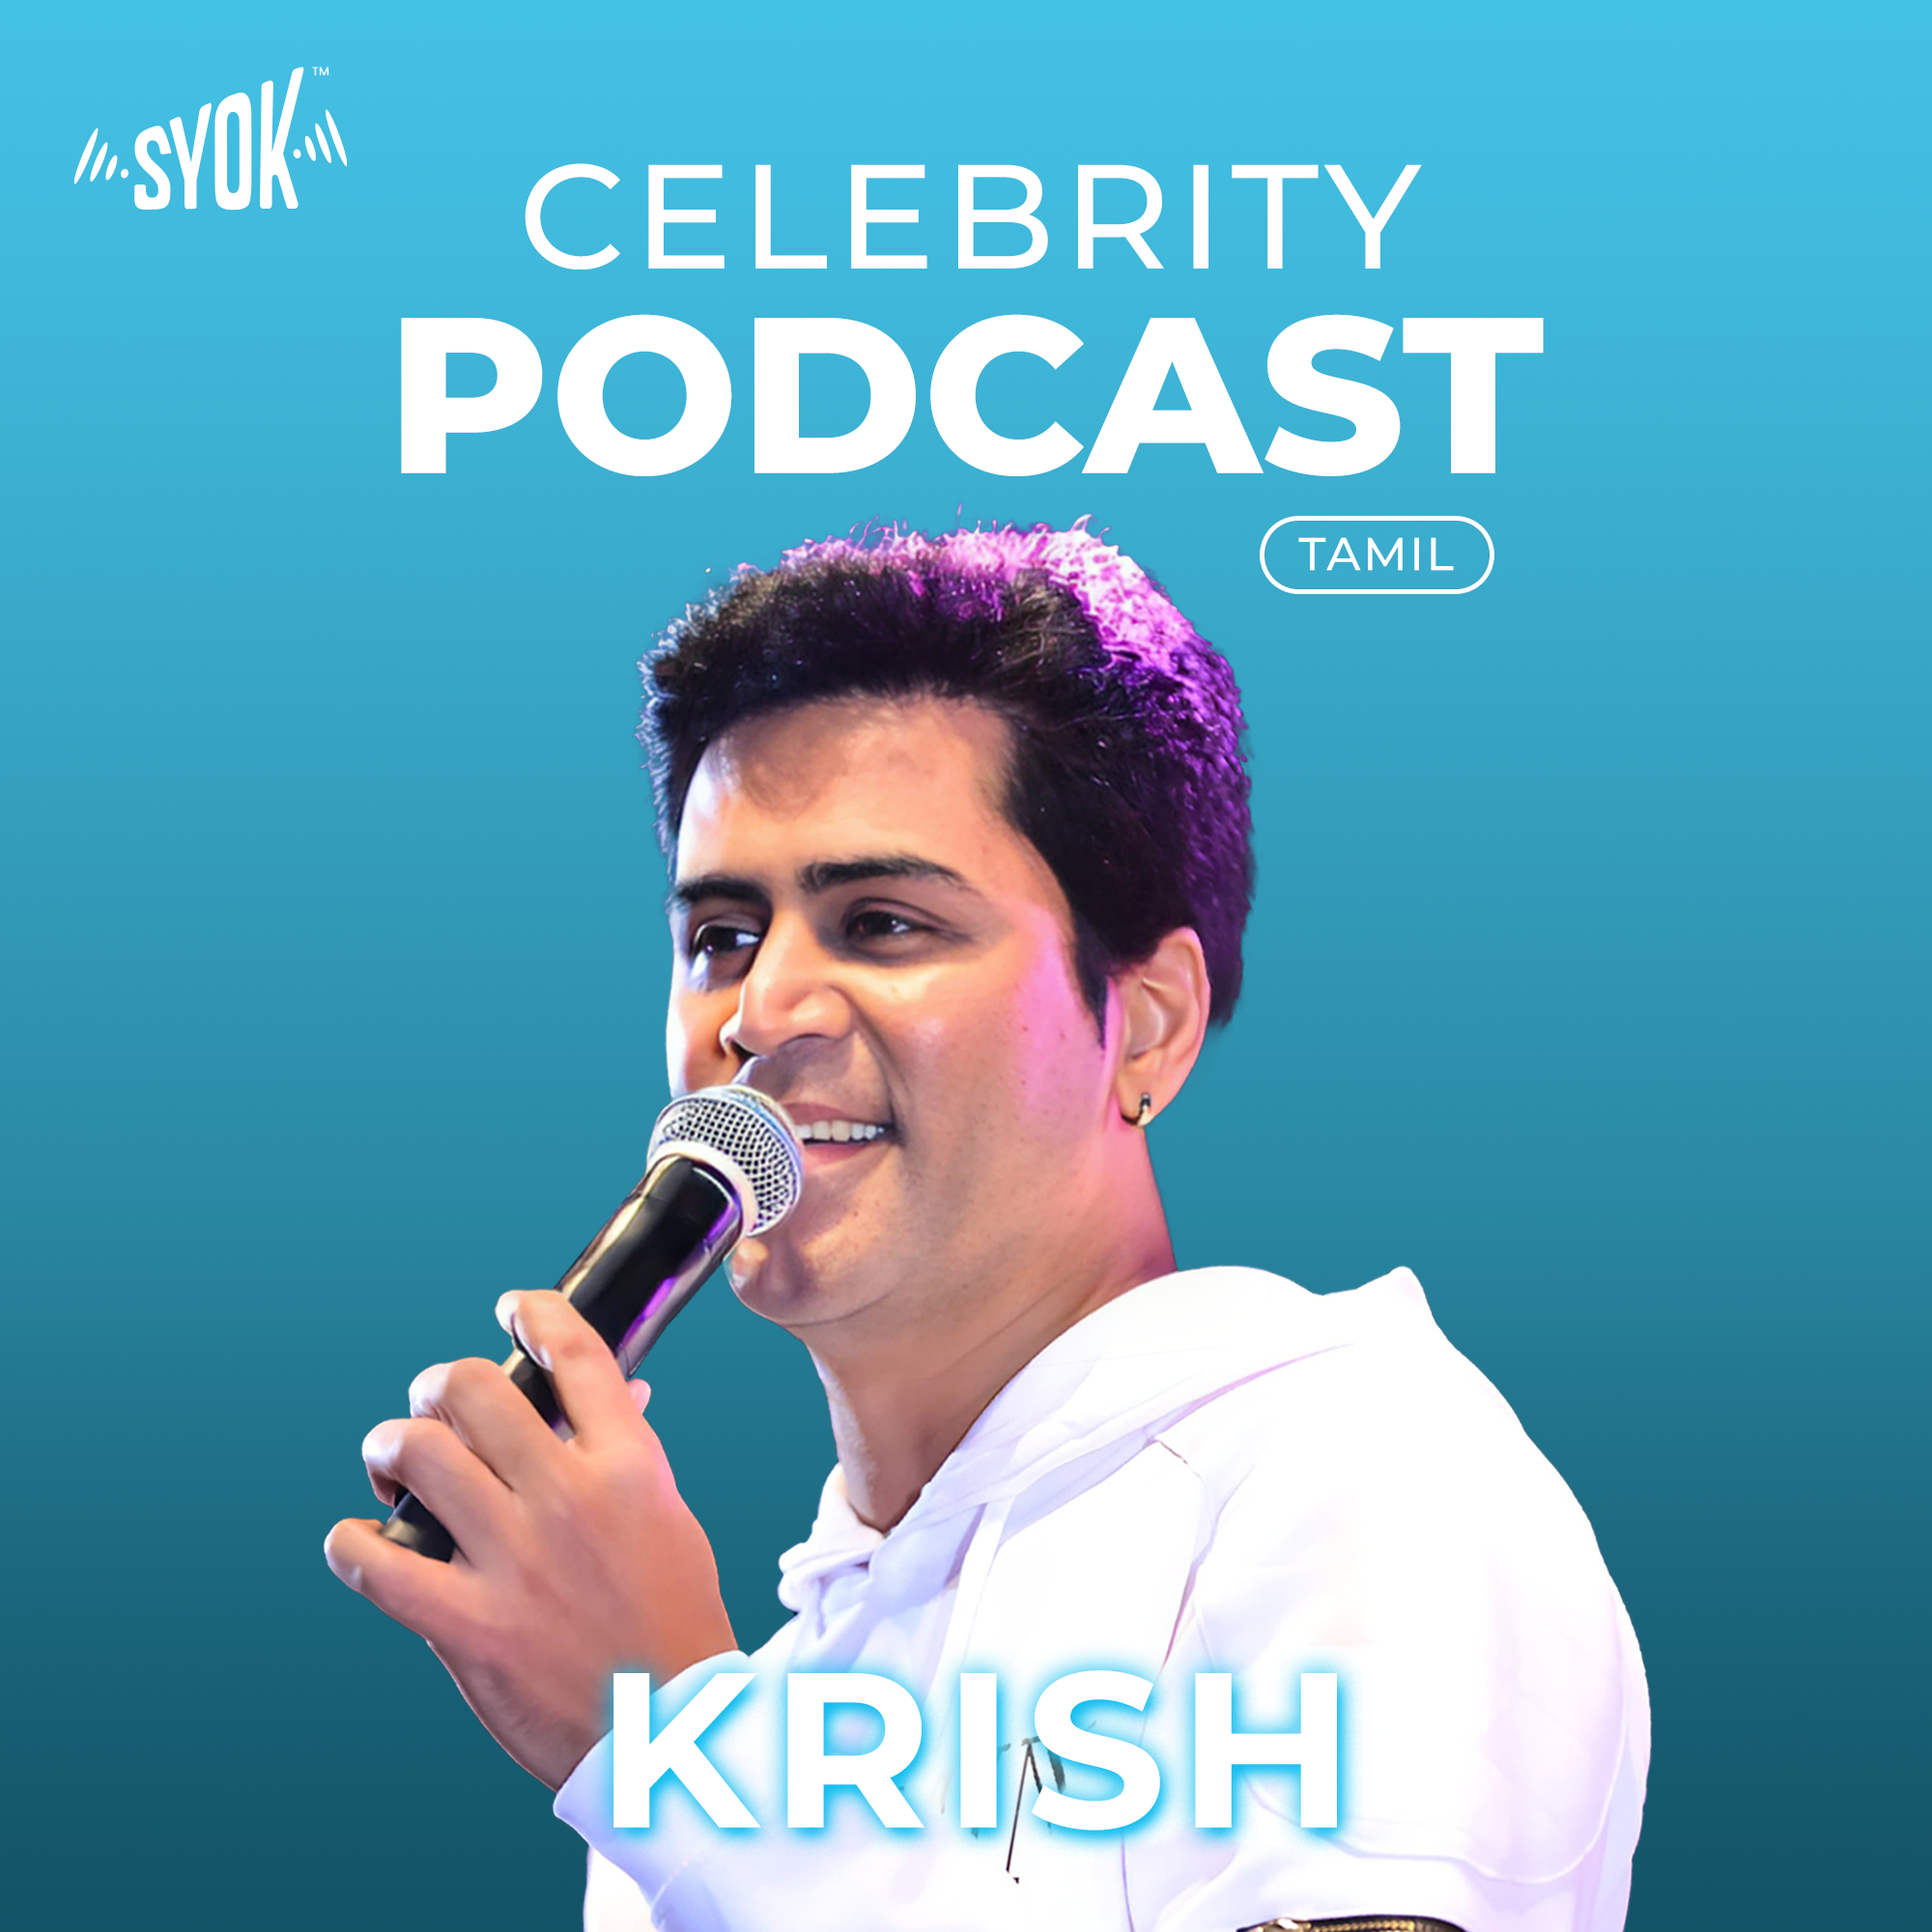 Celebrity Podcast: Krish - SYOK Podcast [TM]